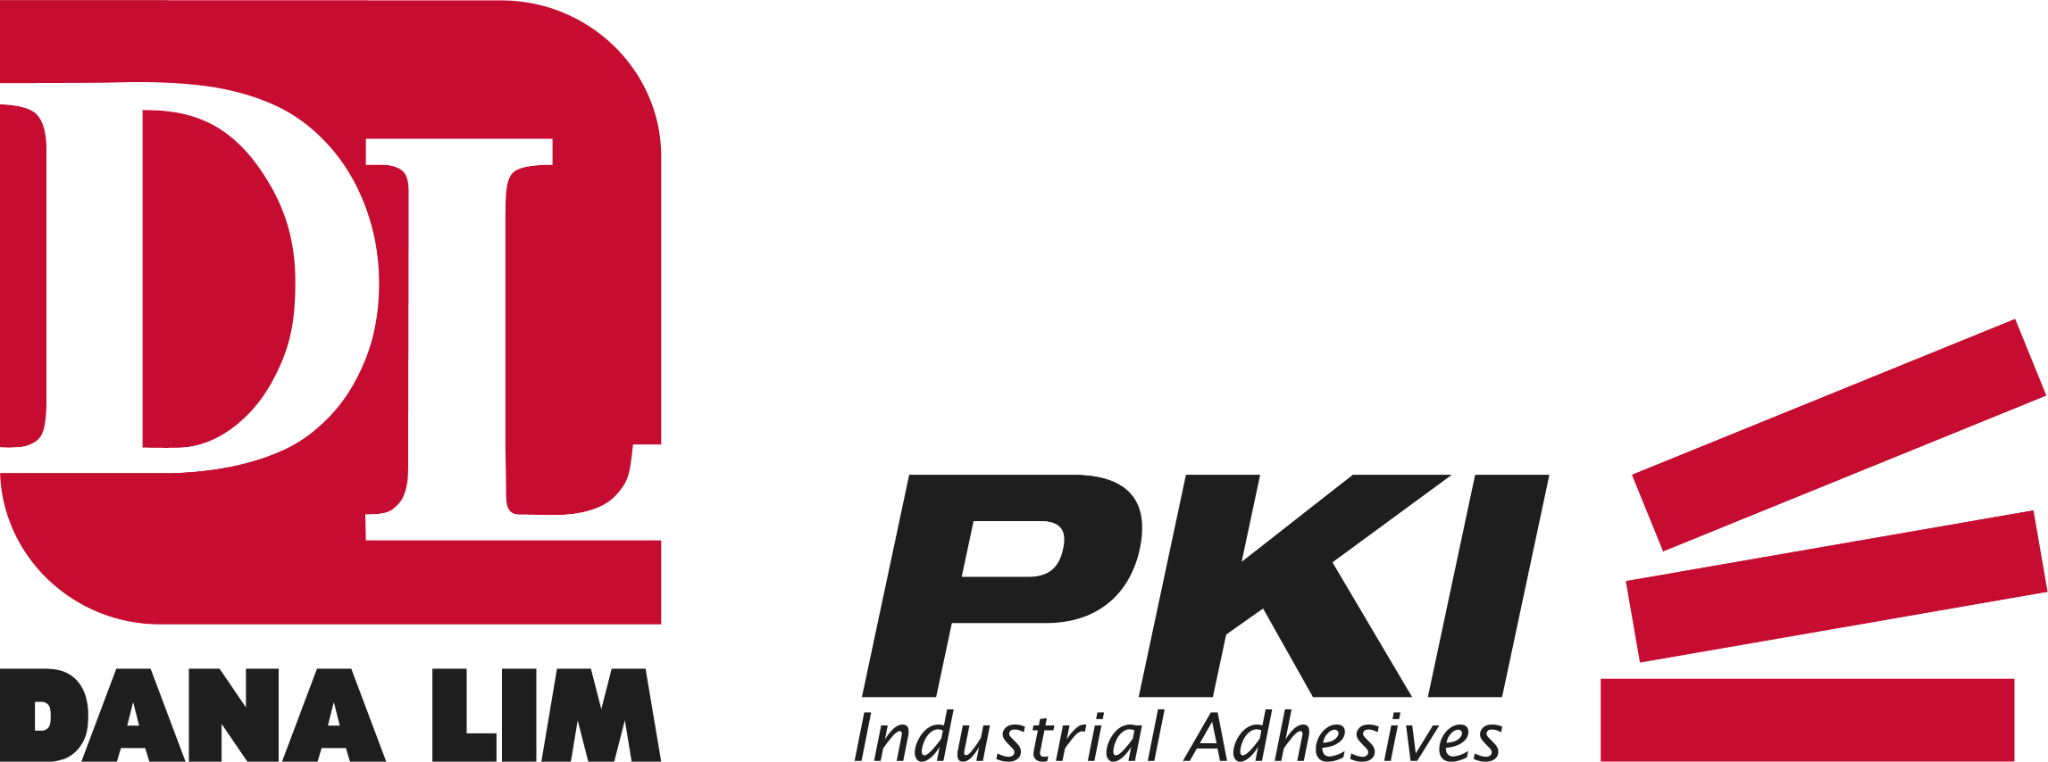 pki_logo